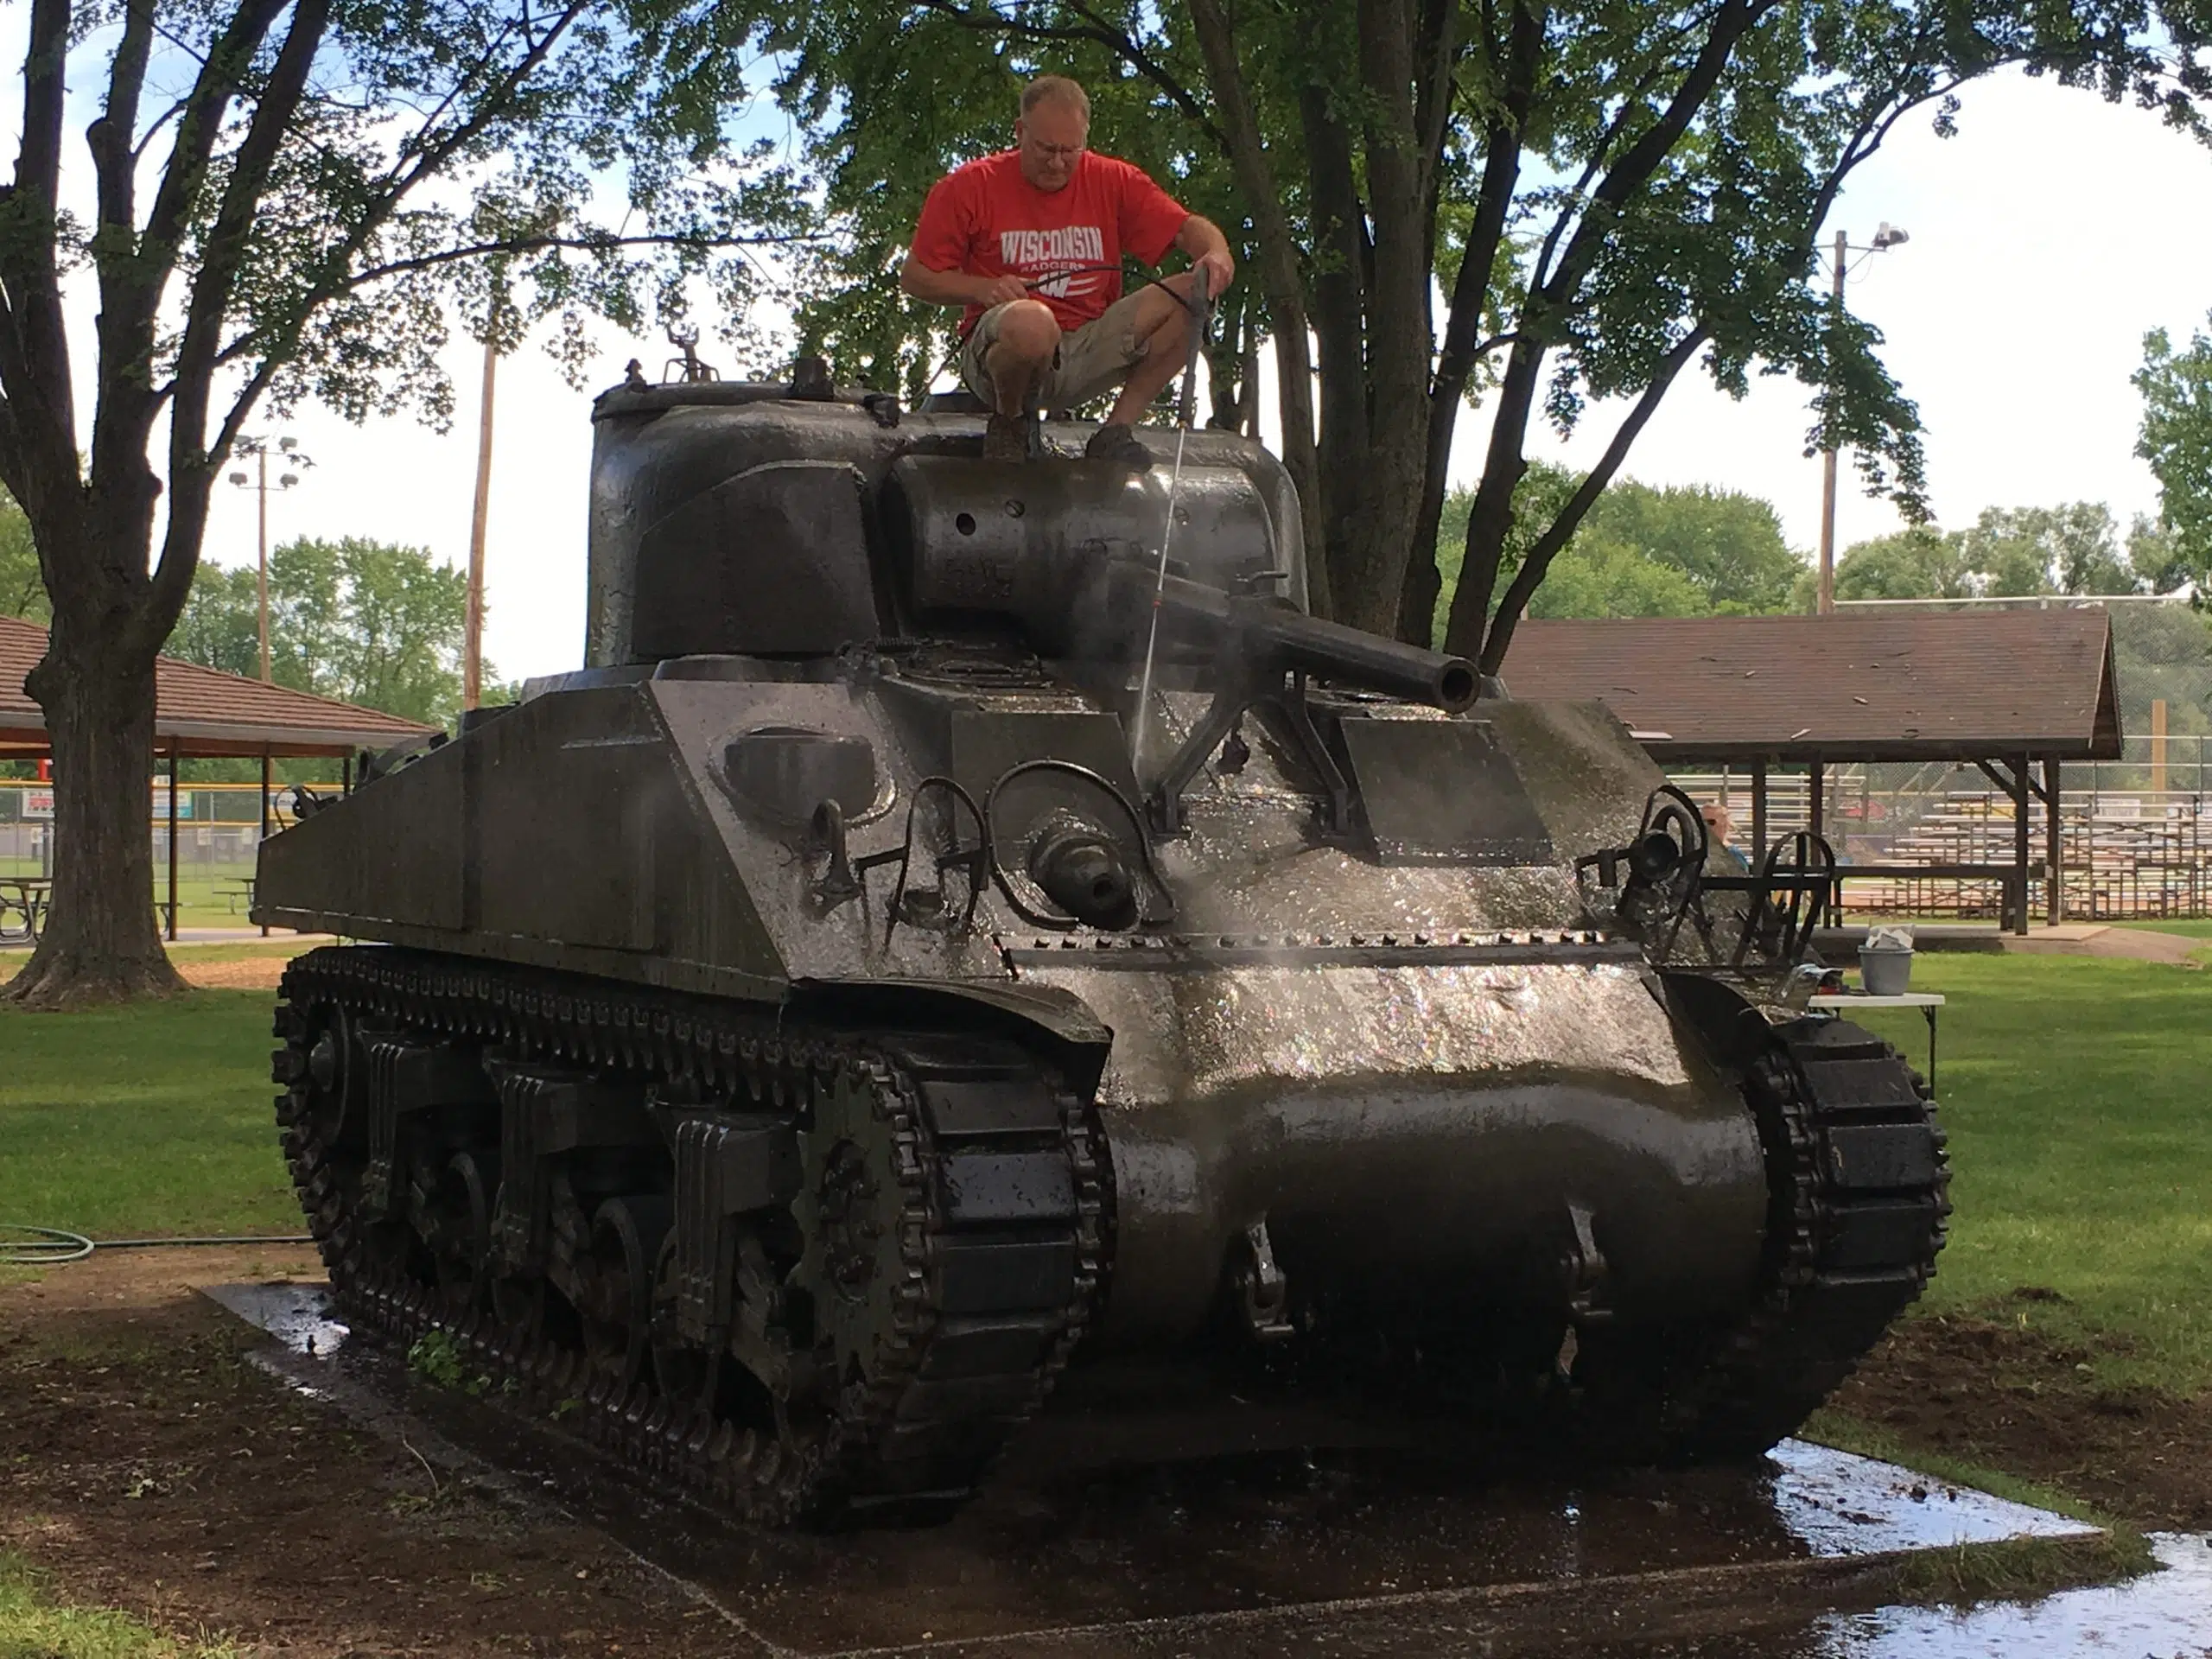 Tank Restoration in Memorial Park Started Today